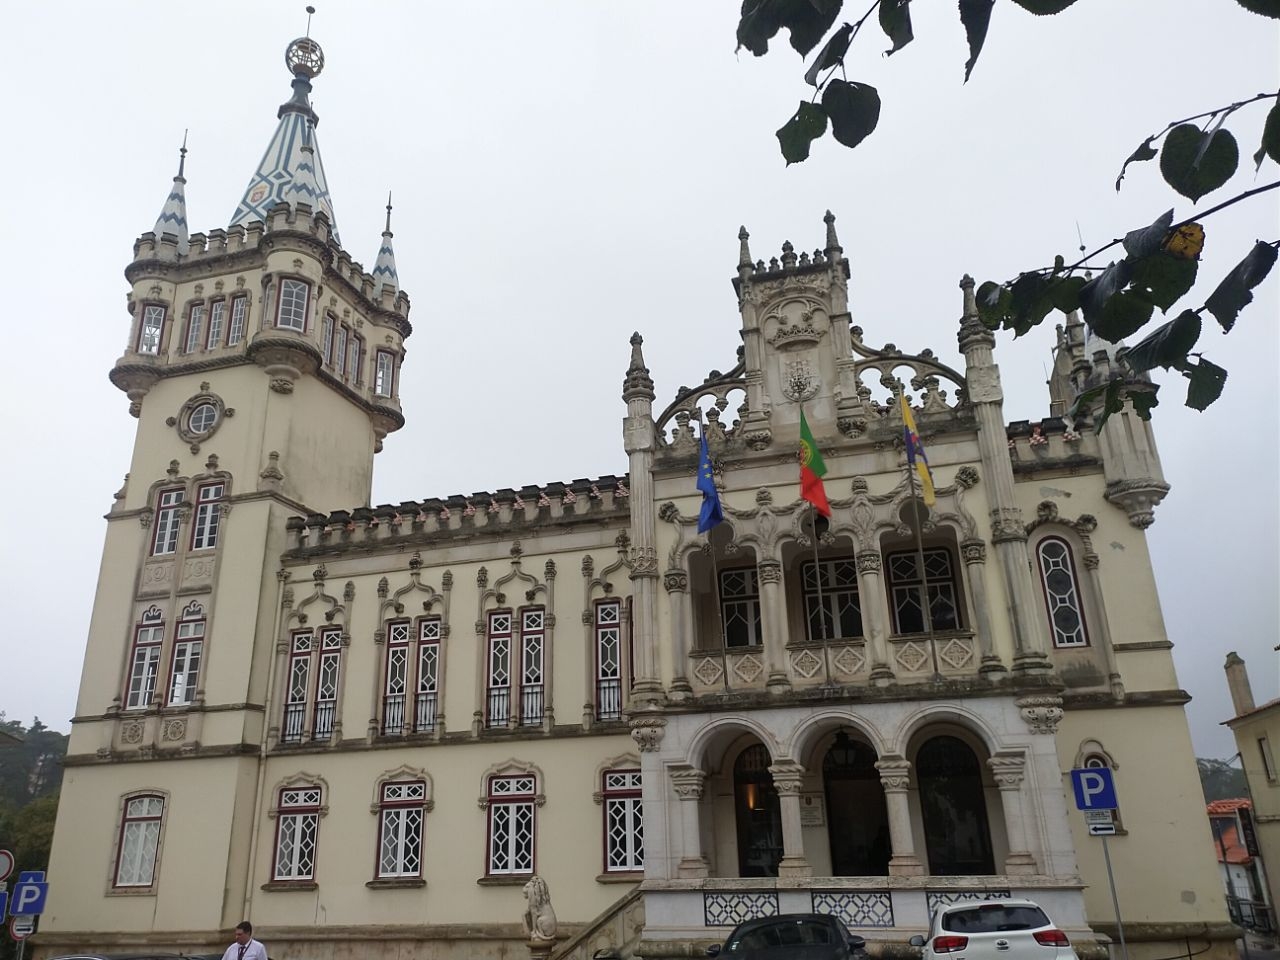 Синтра центр города / Sintra historic center